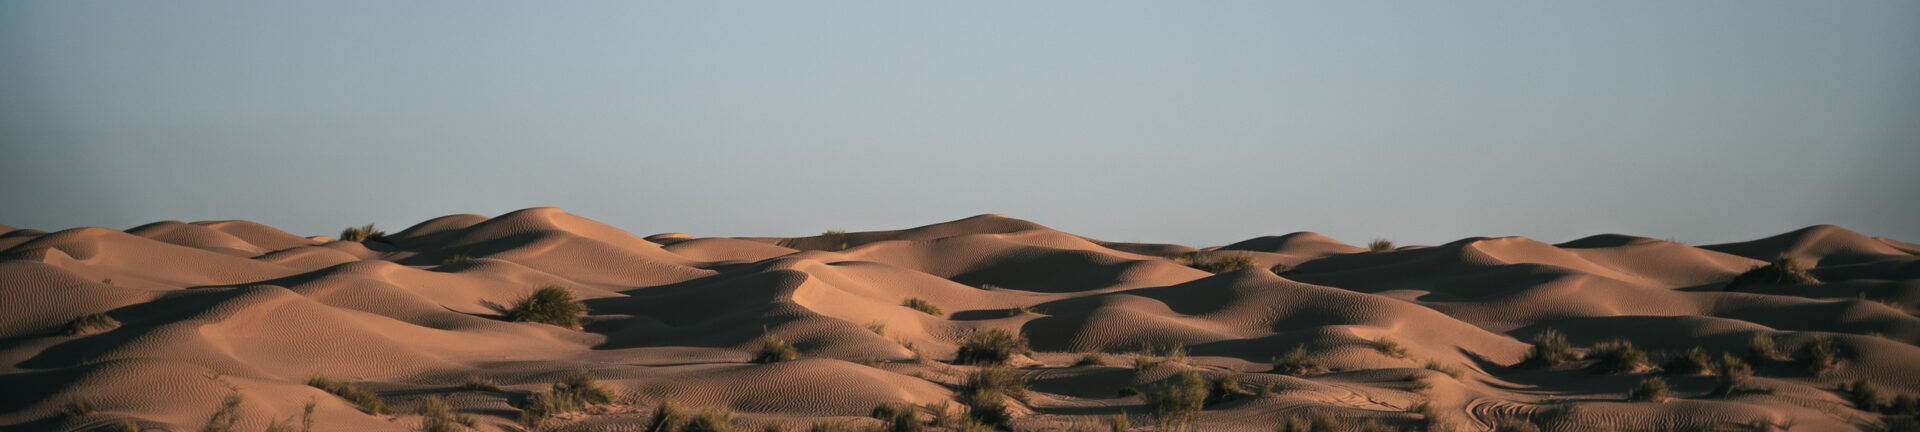 dunes ksar ghilane tunisie